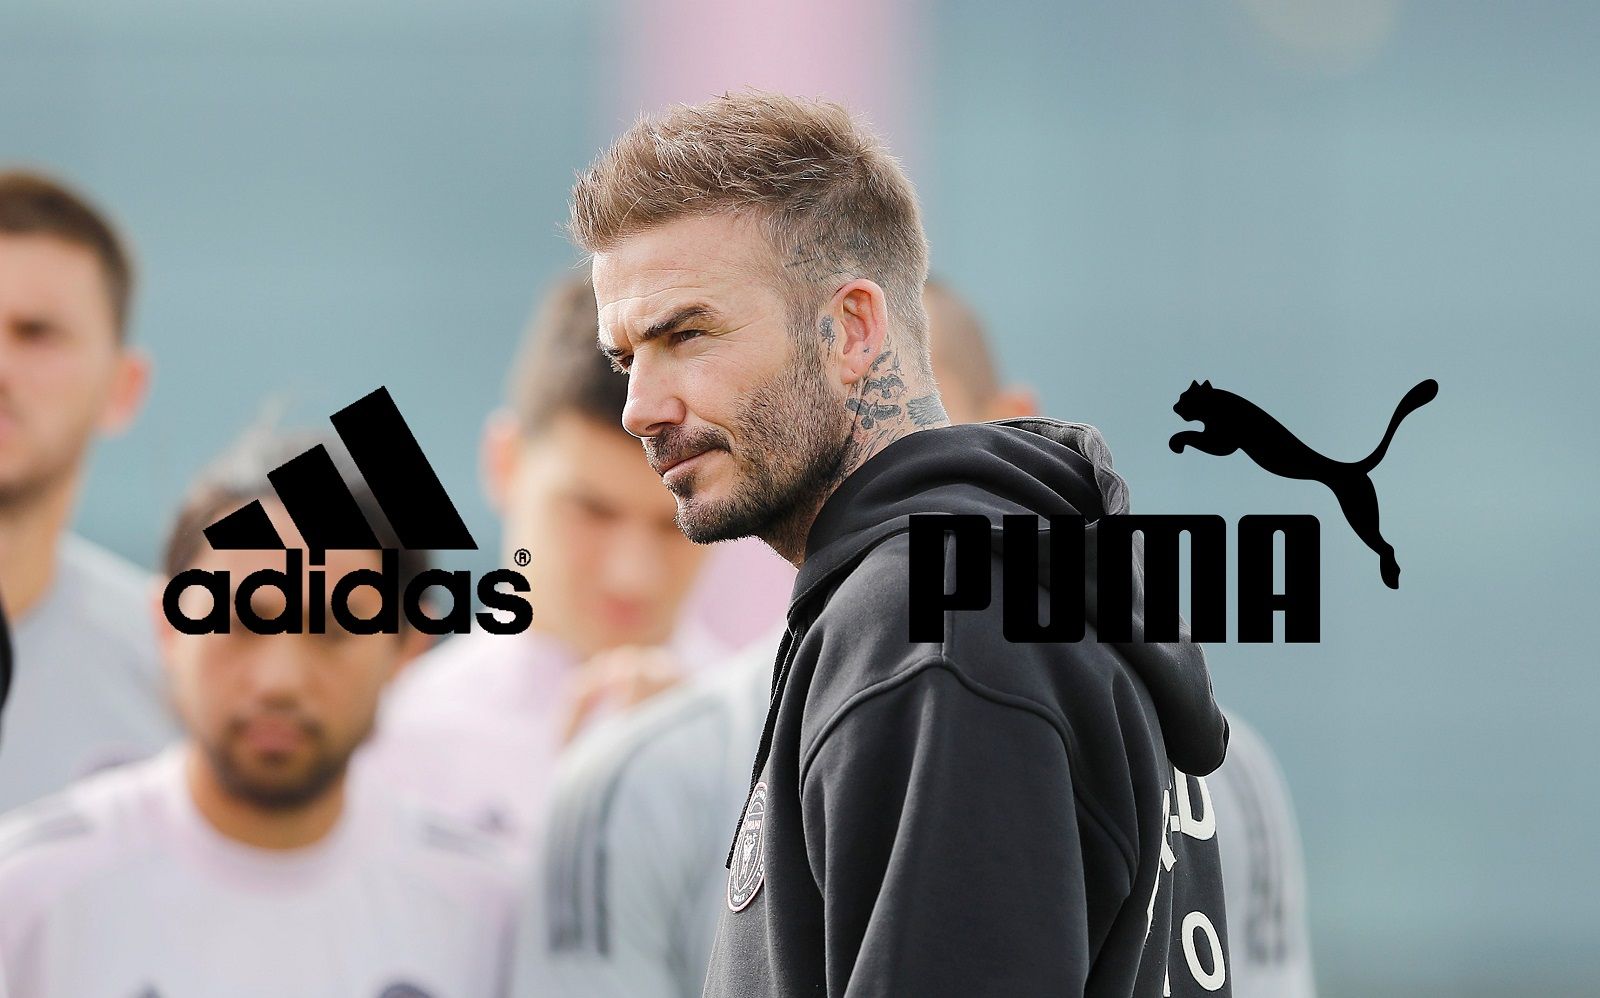 Voluntario Suyo correr David Beckham will work on adidas and PUMA rivaly documentary